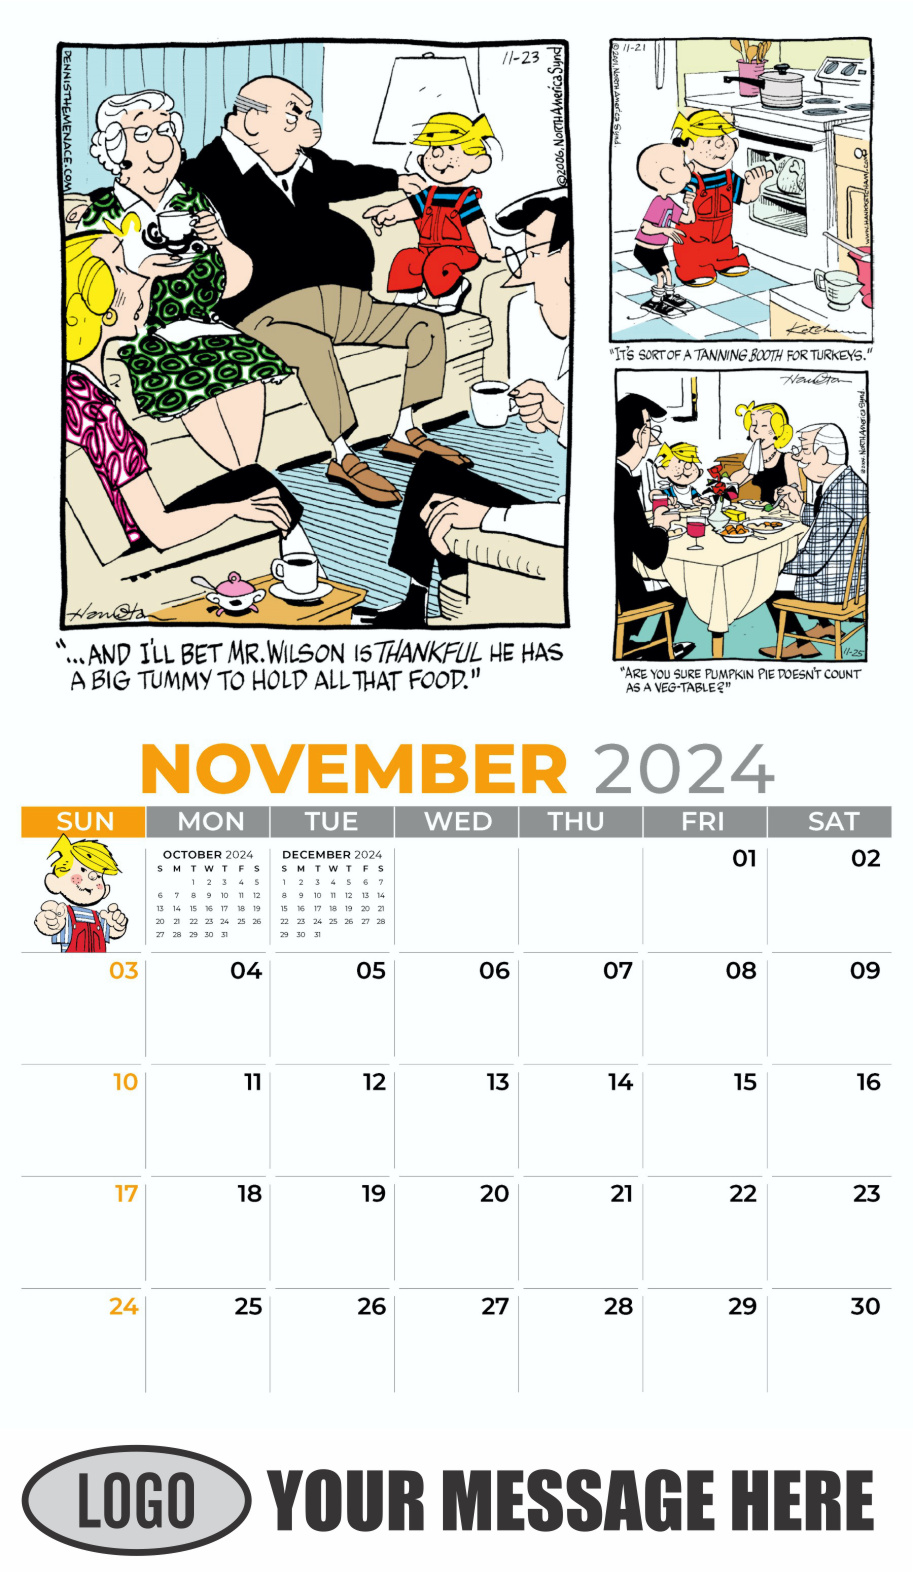 Dennis the Menace 2024 Business Promotional Wall Calendar - November